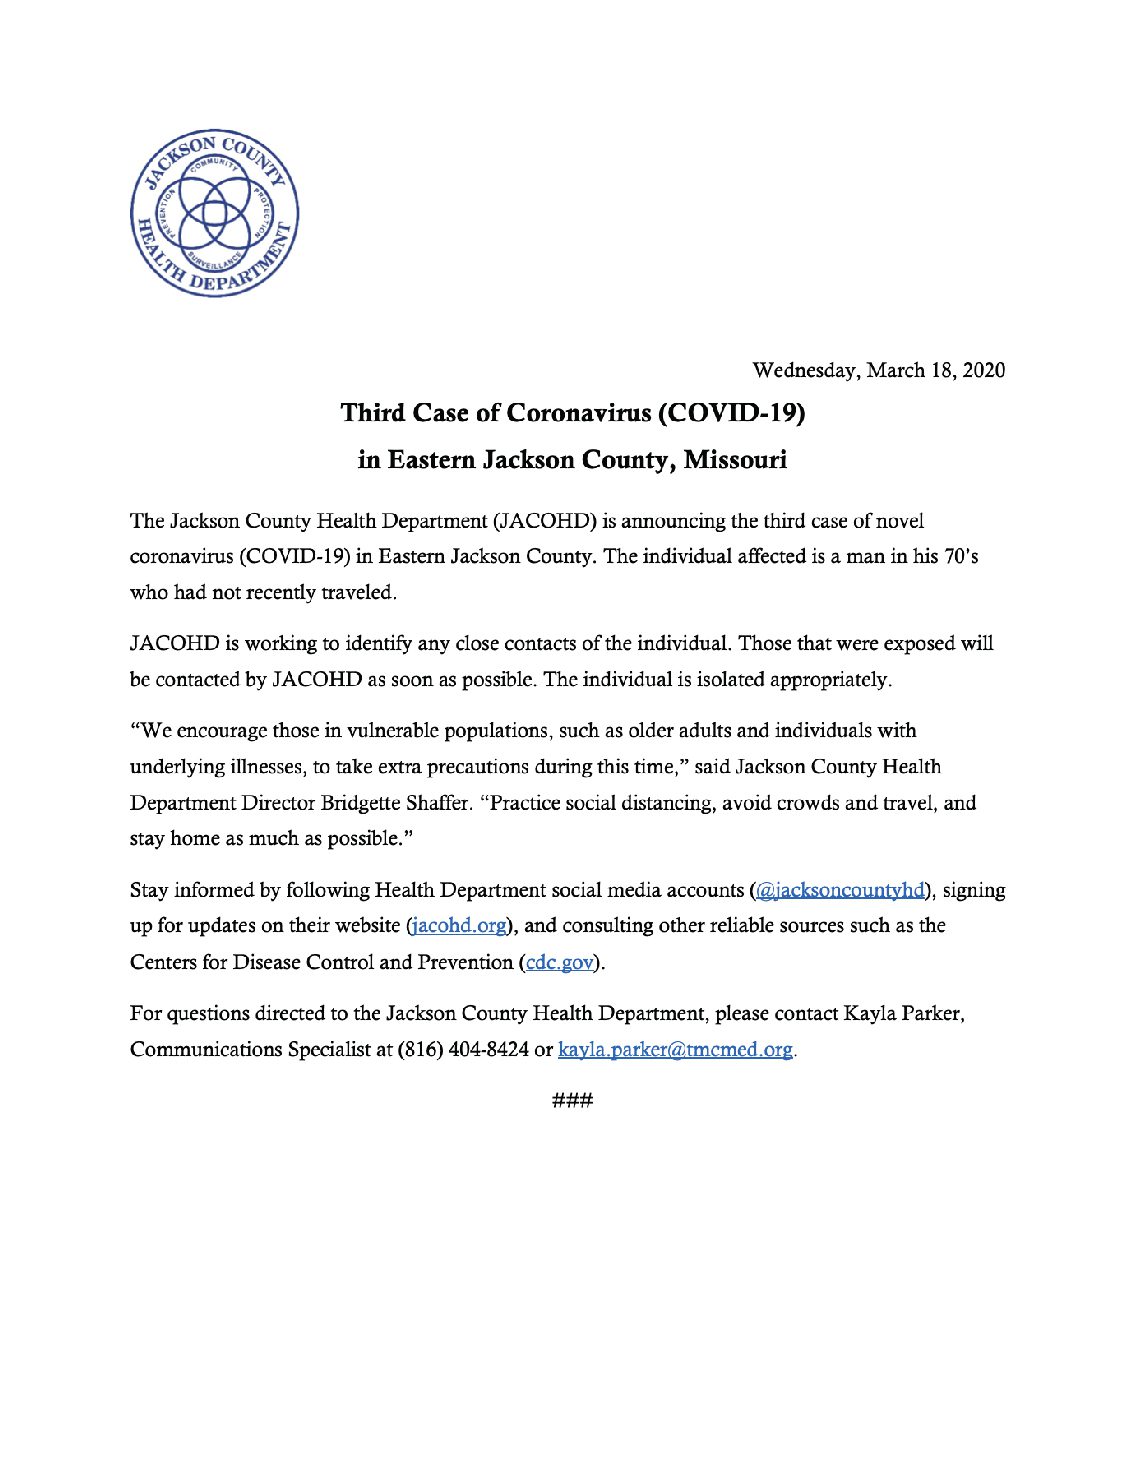 Third Case of Coronavirus in Eastern Jackson County